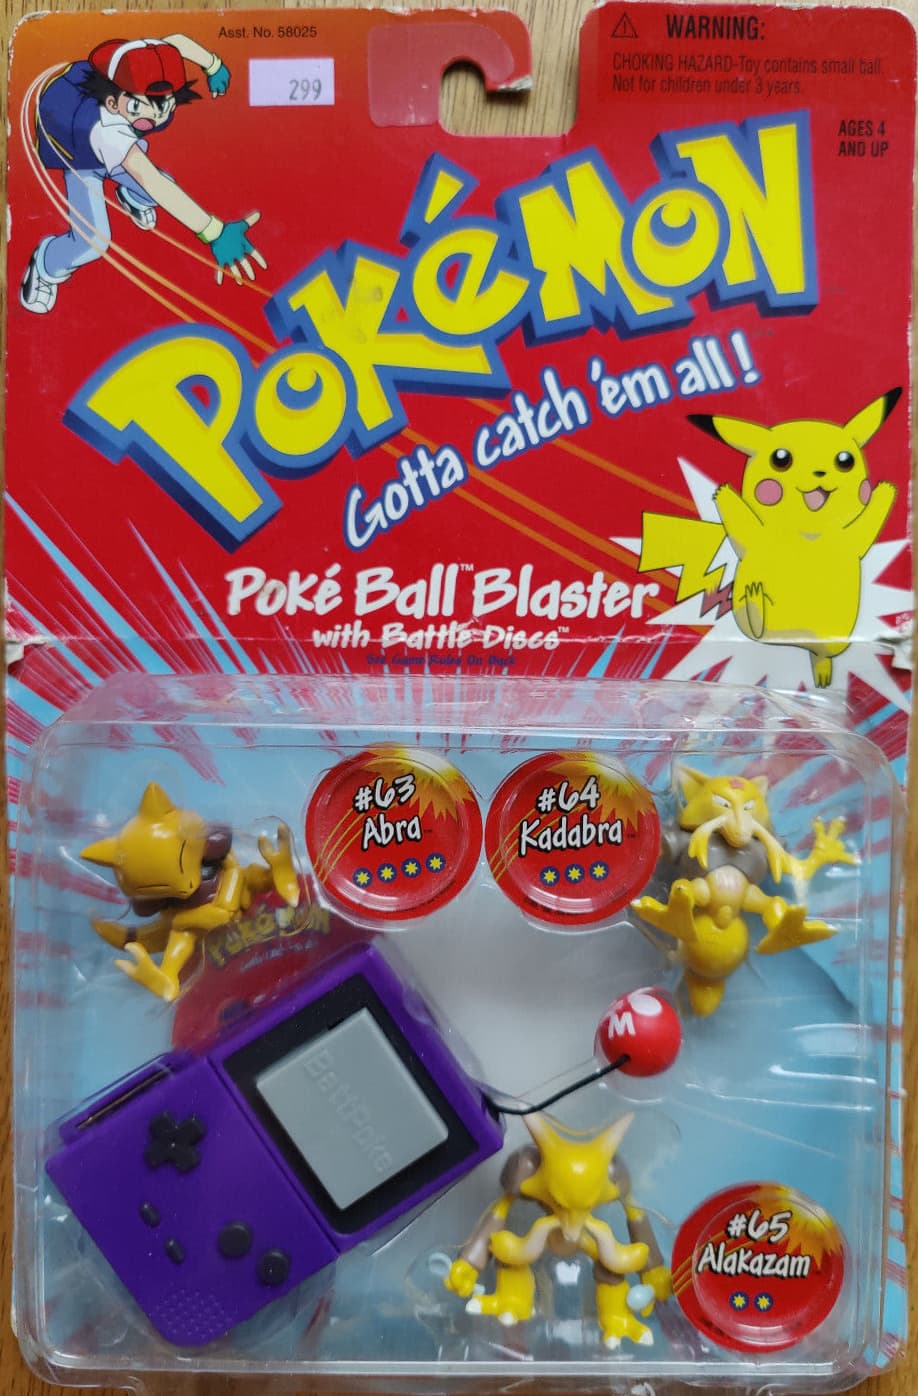 Pokemon with their pokeball, Farfetch'd